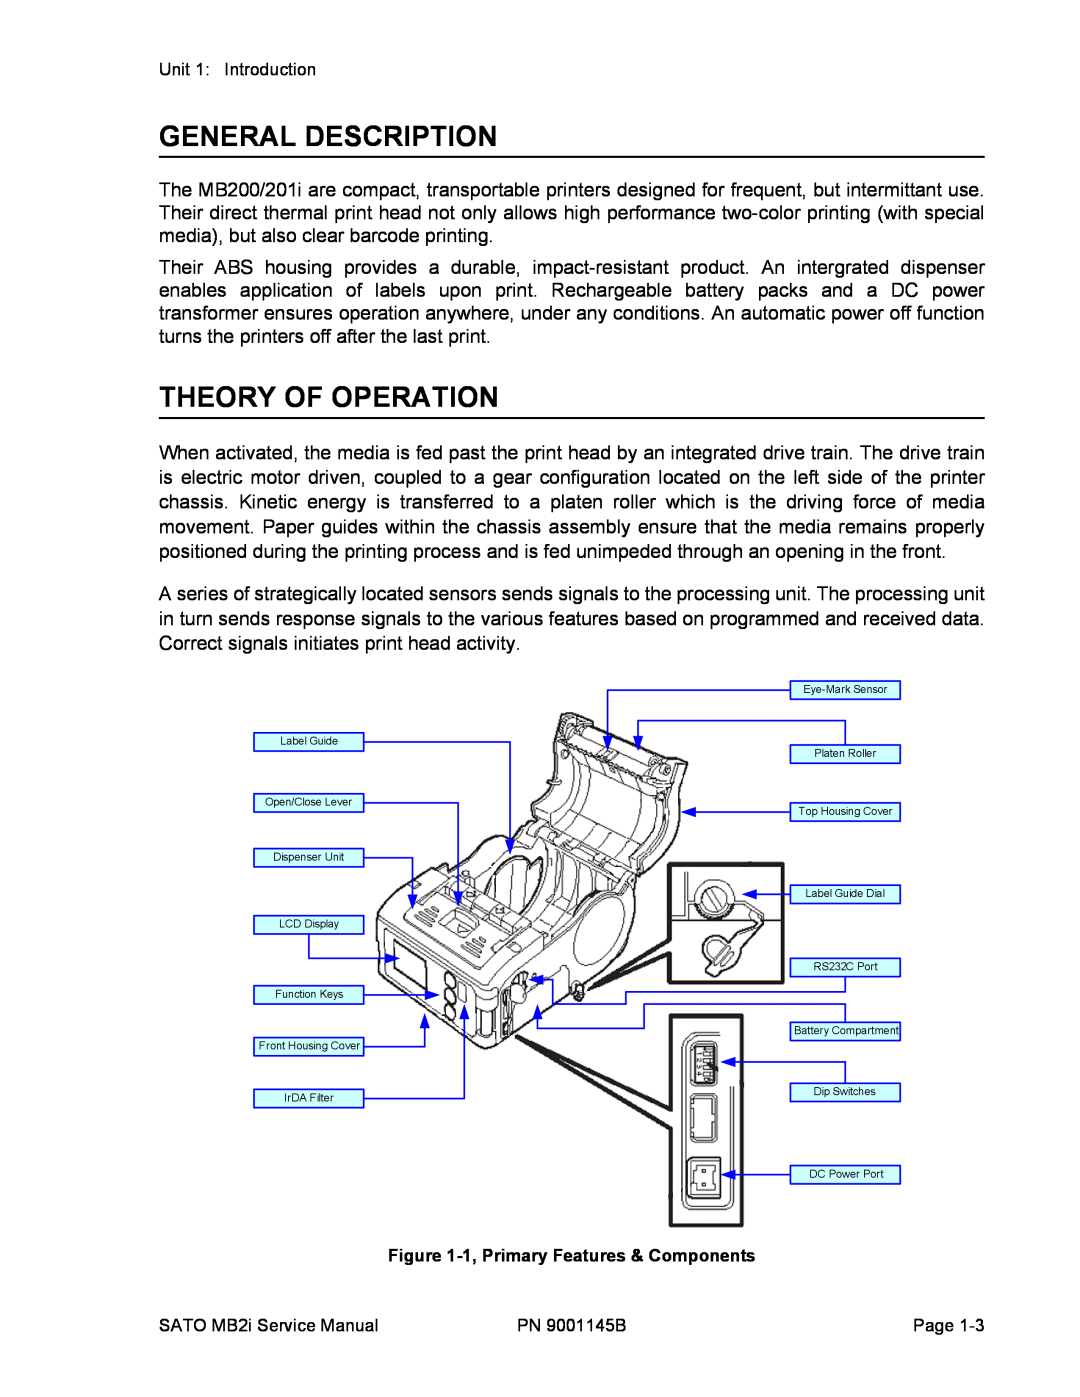 SATO 200i manual General Description, Theory Of Operation 